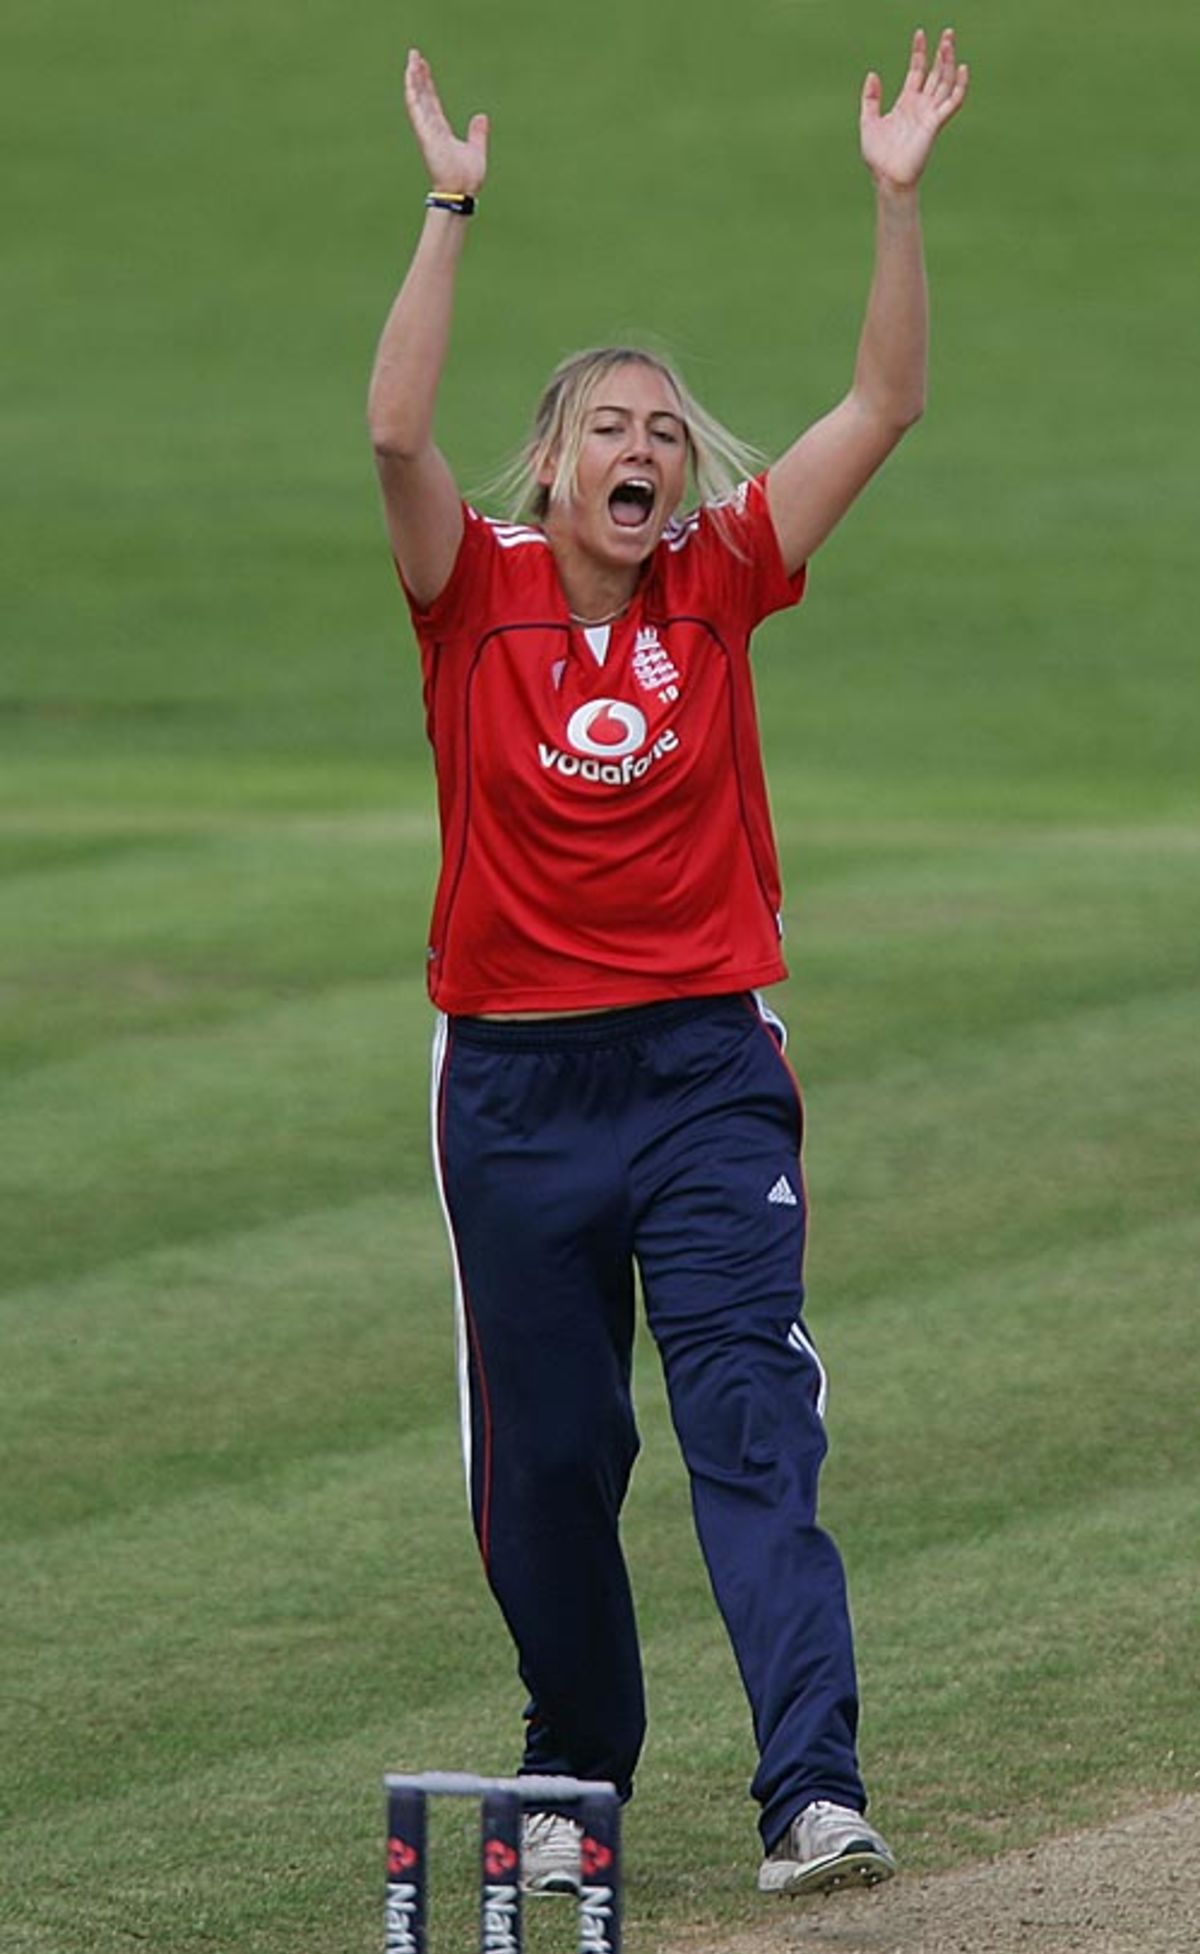 Laura Marsh appeals against Annelie Minny, England v South Africa, Women's Twenty20 International, Northampton, August 23, 2008